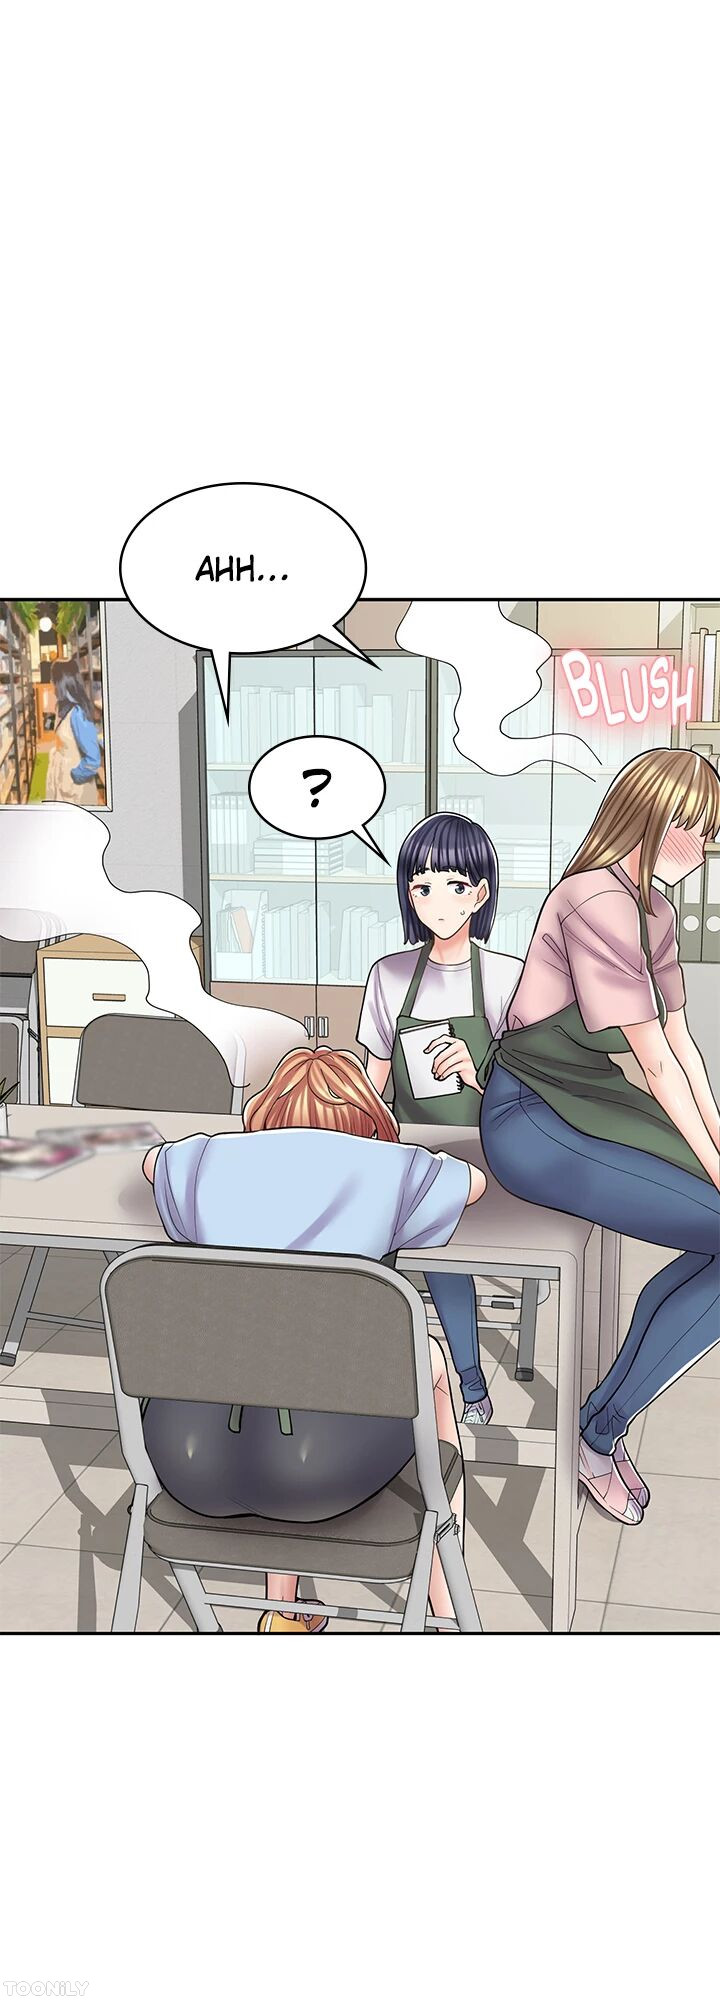 Erotic Manga Café Girls Chapter 36 - MyToon.net